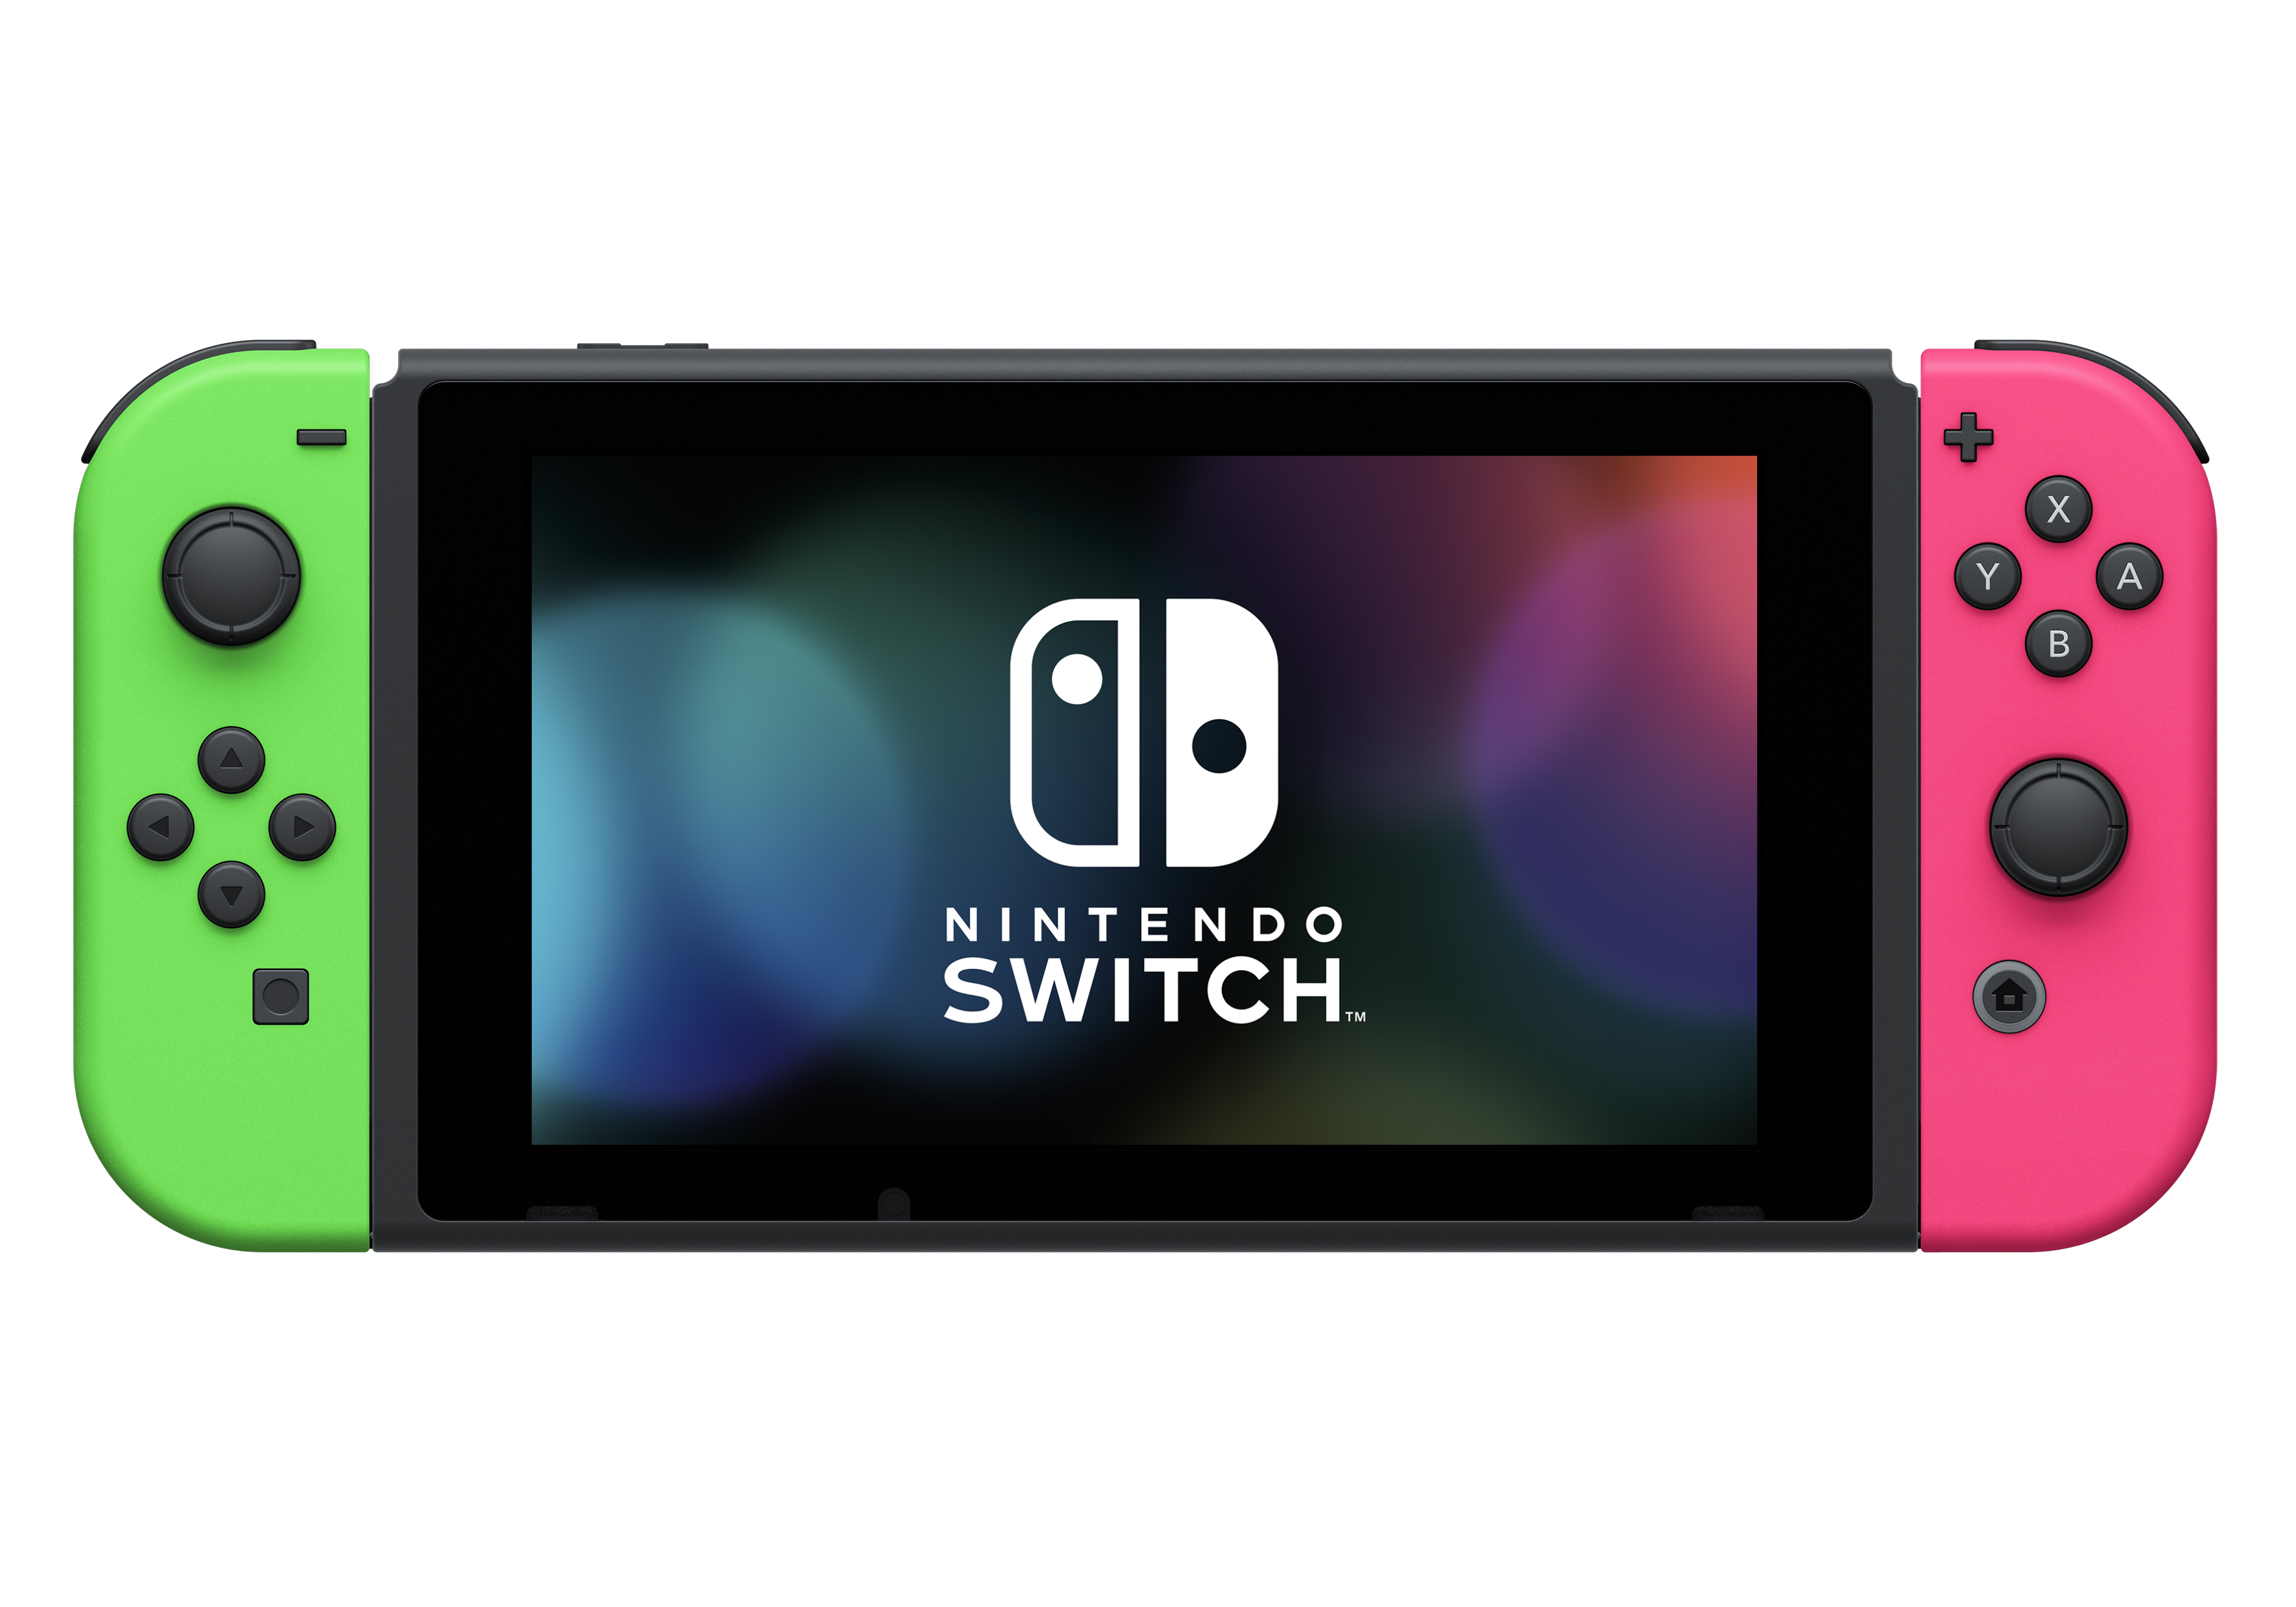 Nintendo Switch Hardware with Splatoon 2 + Neon Green/Neon Pink Joy-Cons (Nintendo Switch) - image 3 of 11